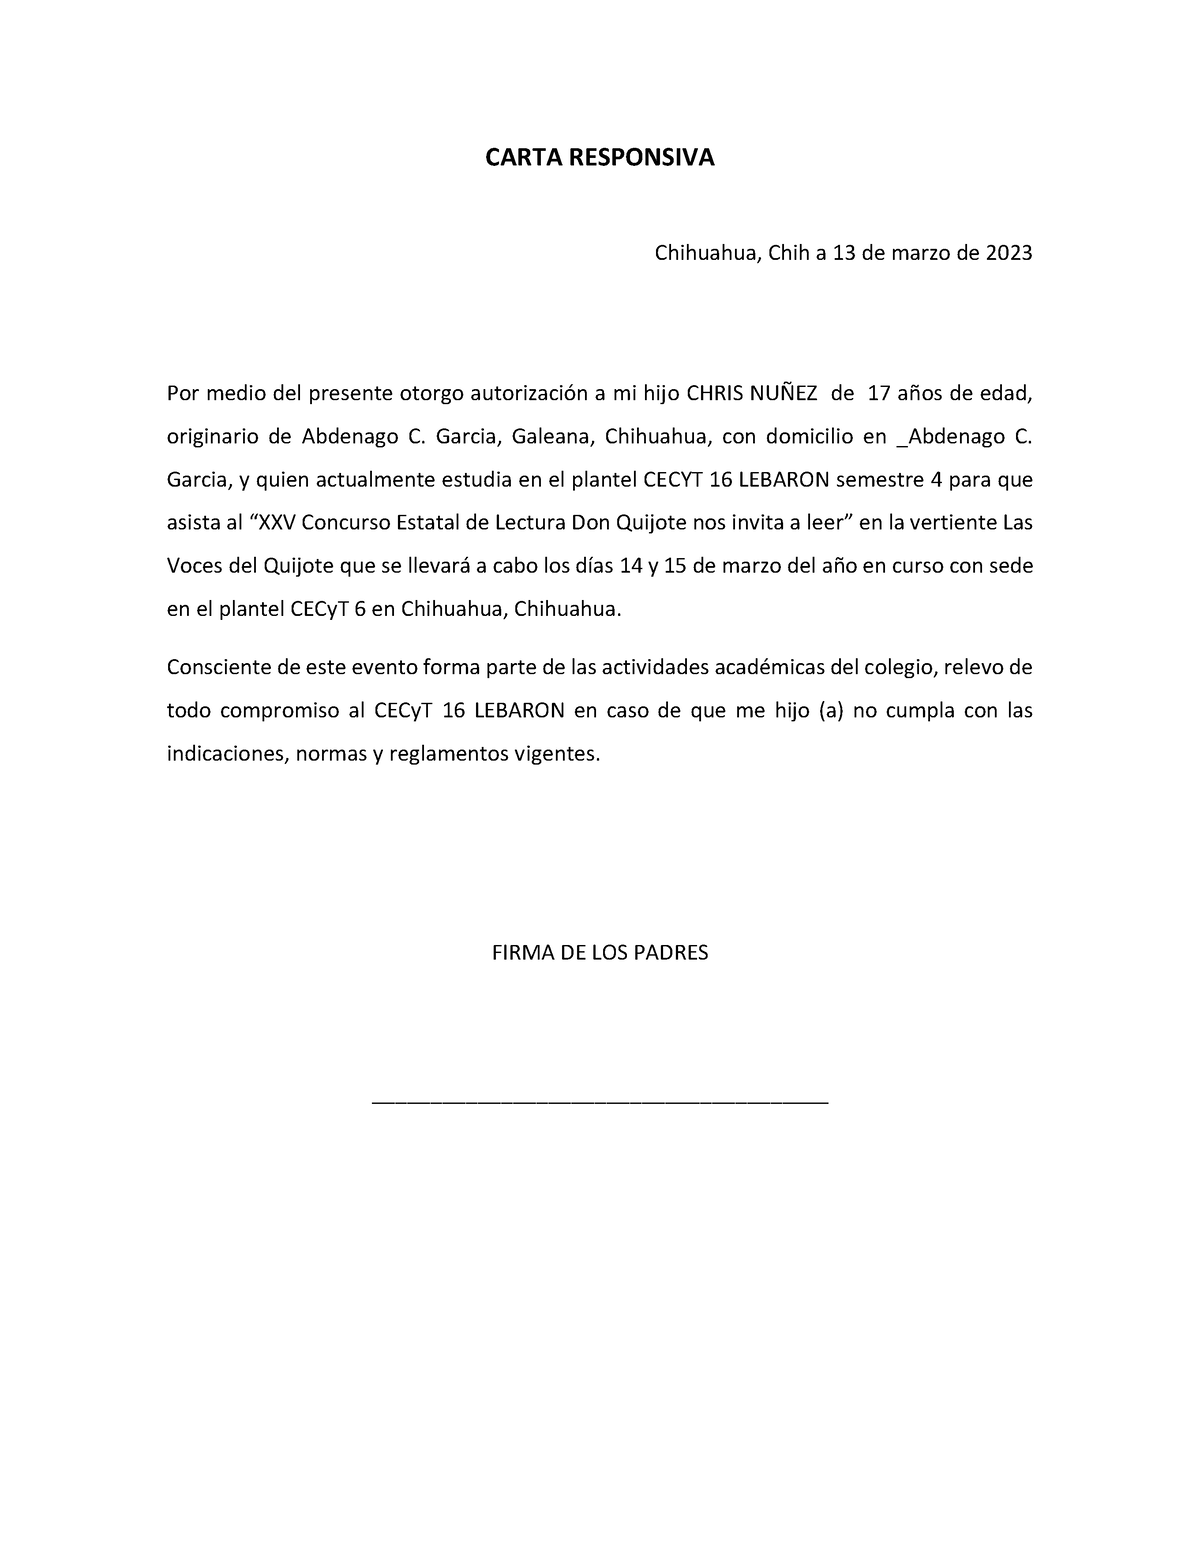 Carta Responsiva Carta Responsiva Chihuahua Chih A 13 De Marzo De 2023 Por Medio Del Presente 1654